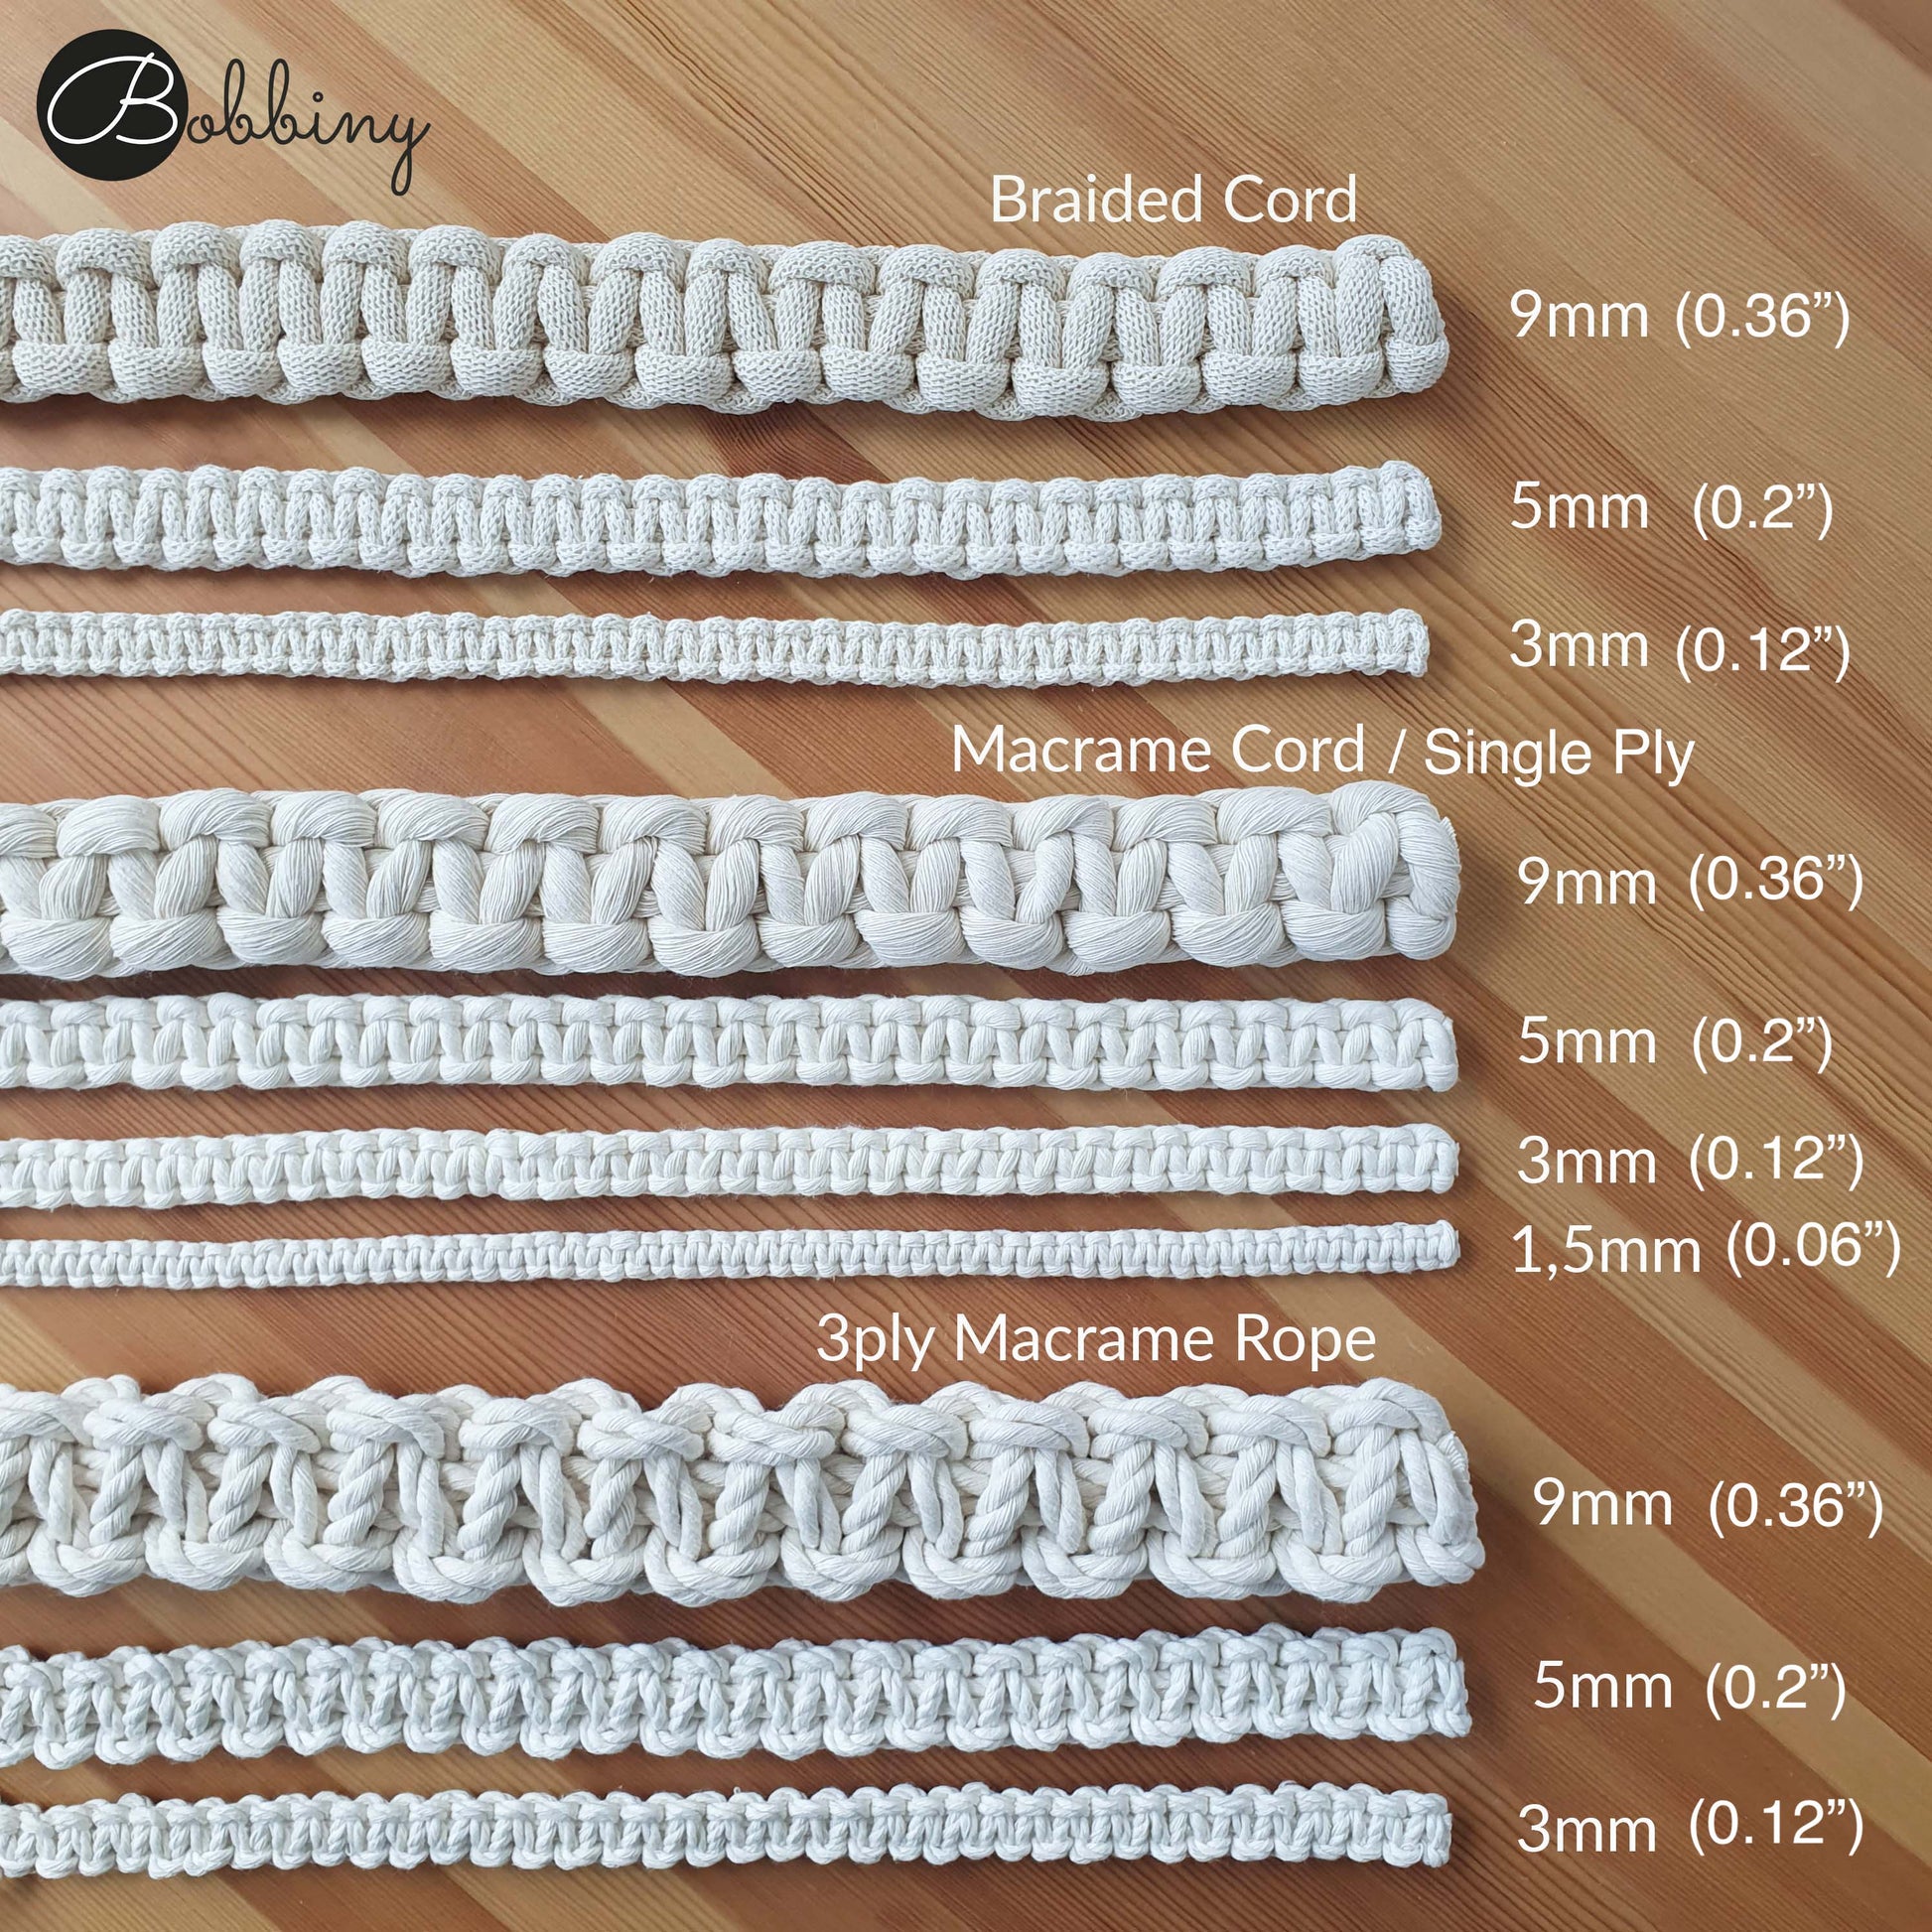 Bobbiny Premium Braided Cord (5mm) ~ 100m – Cotton Pod